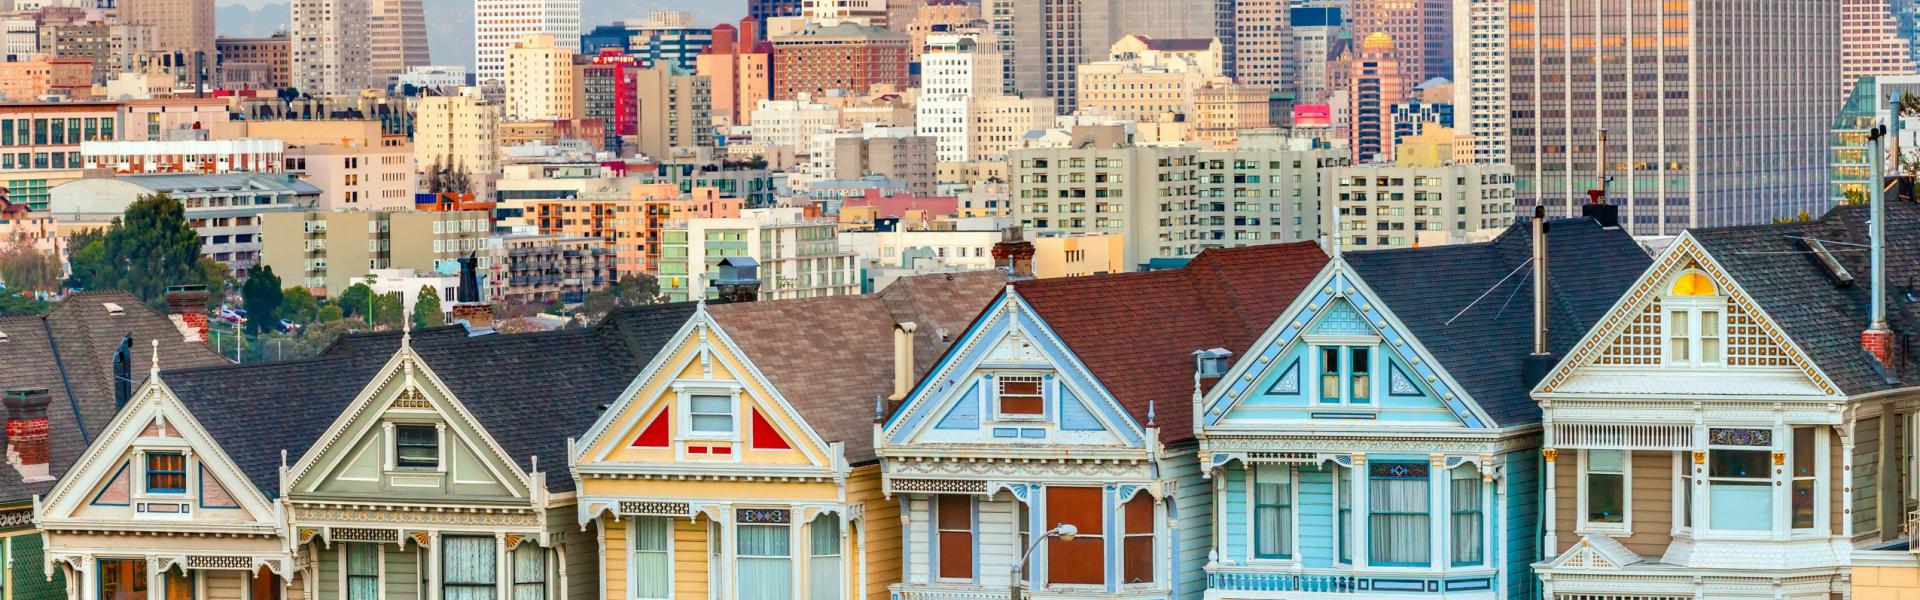 Noclegi i apartamenty wakacyjne w San Francisco - Casamundo